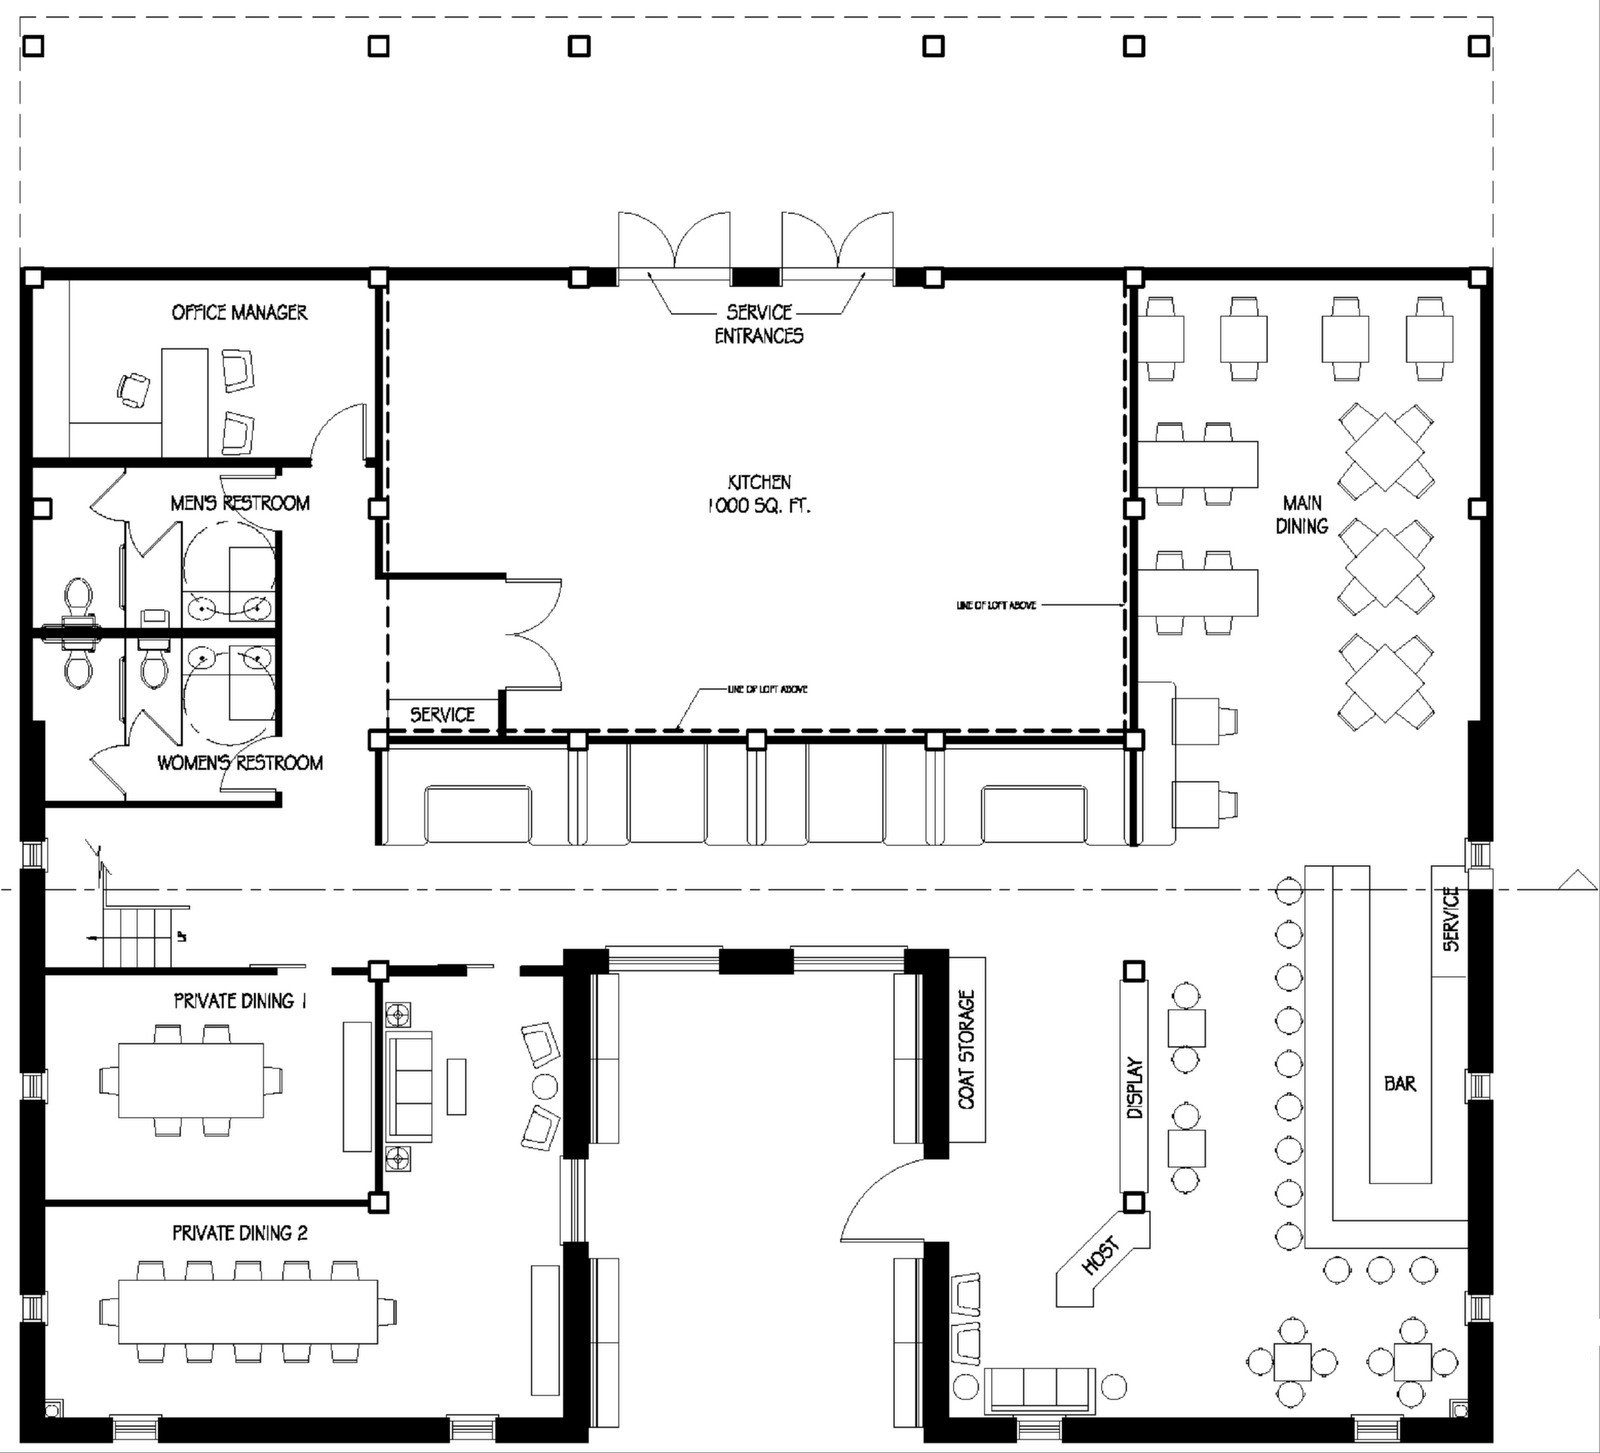 Restaurant Layout Floor Plan Samples Inspirational Restaurant Floor Plans Of Restaurant Layout Floor Plan Samples ?width=1600&name=restaurant Layout Floor Plan Samples Inspirational Restaurant Floor Plans Of Restaurant Layout Floor Plan Samples 